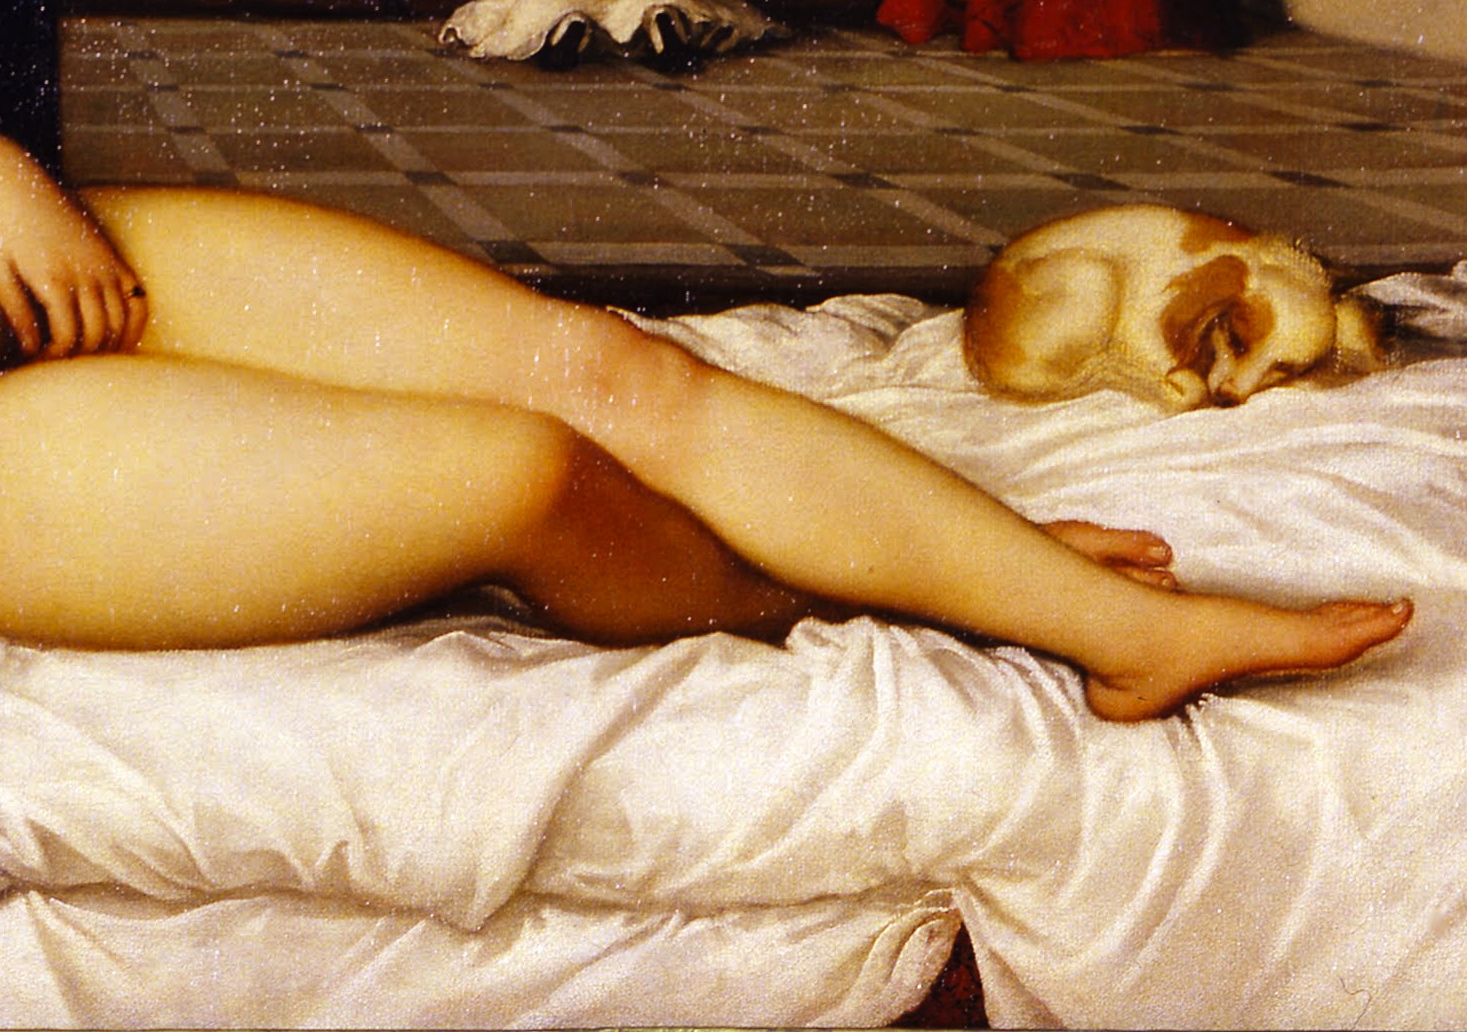 Titian+Danae-1540-1570 (11).jpg